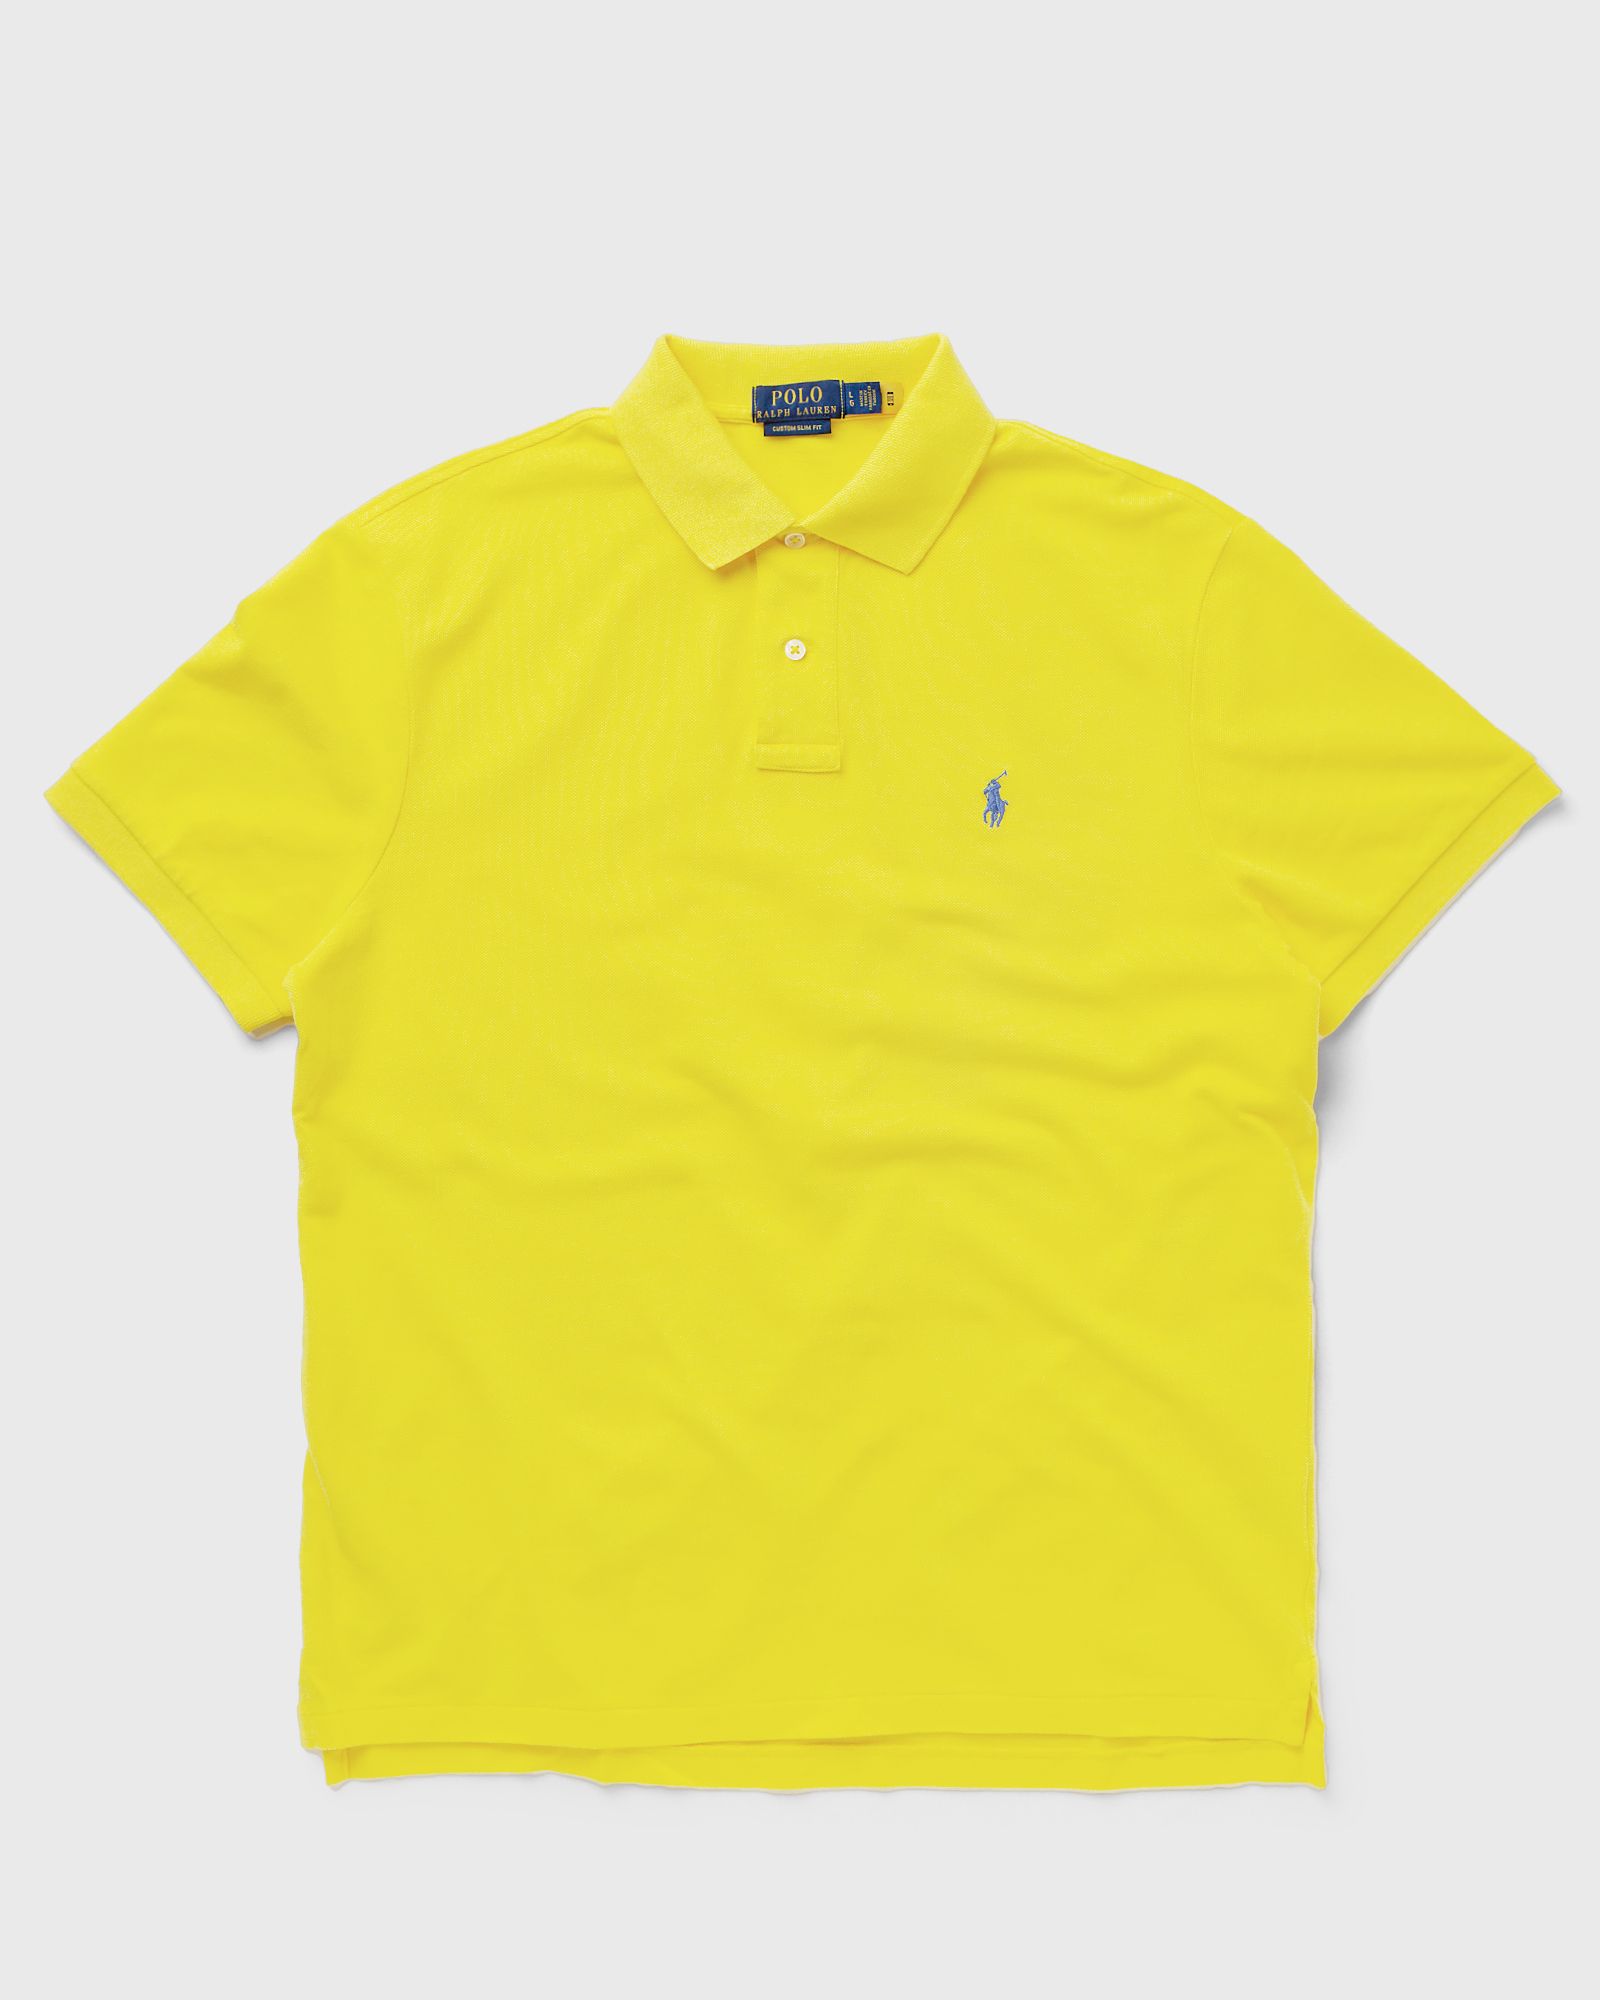 Polo Ralph Lauren - s/s knit shirt men polos yellow in größe:xxl